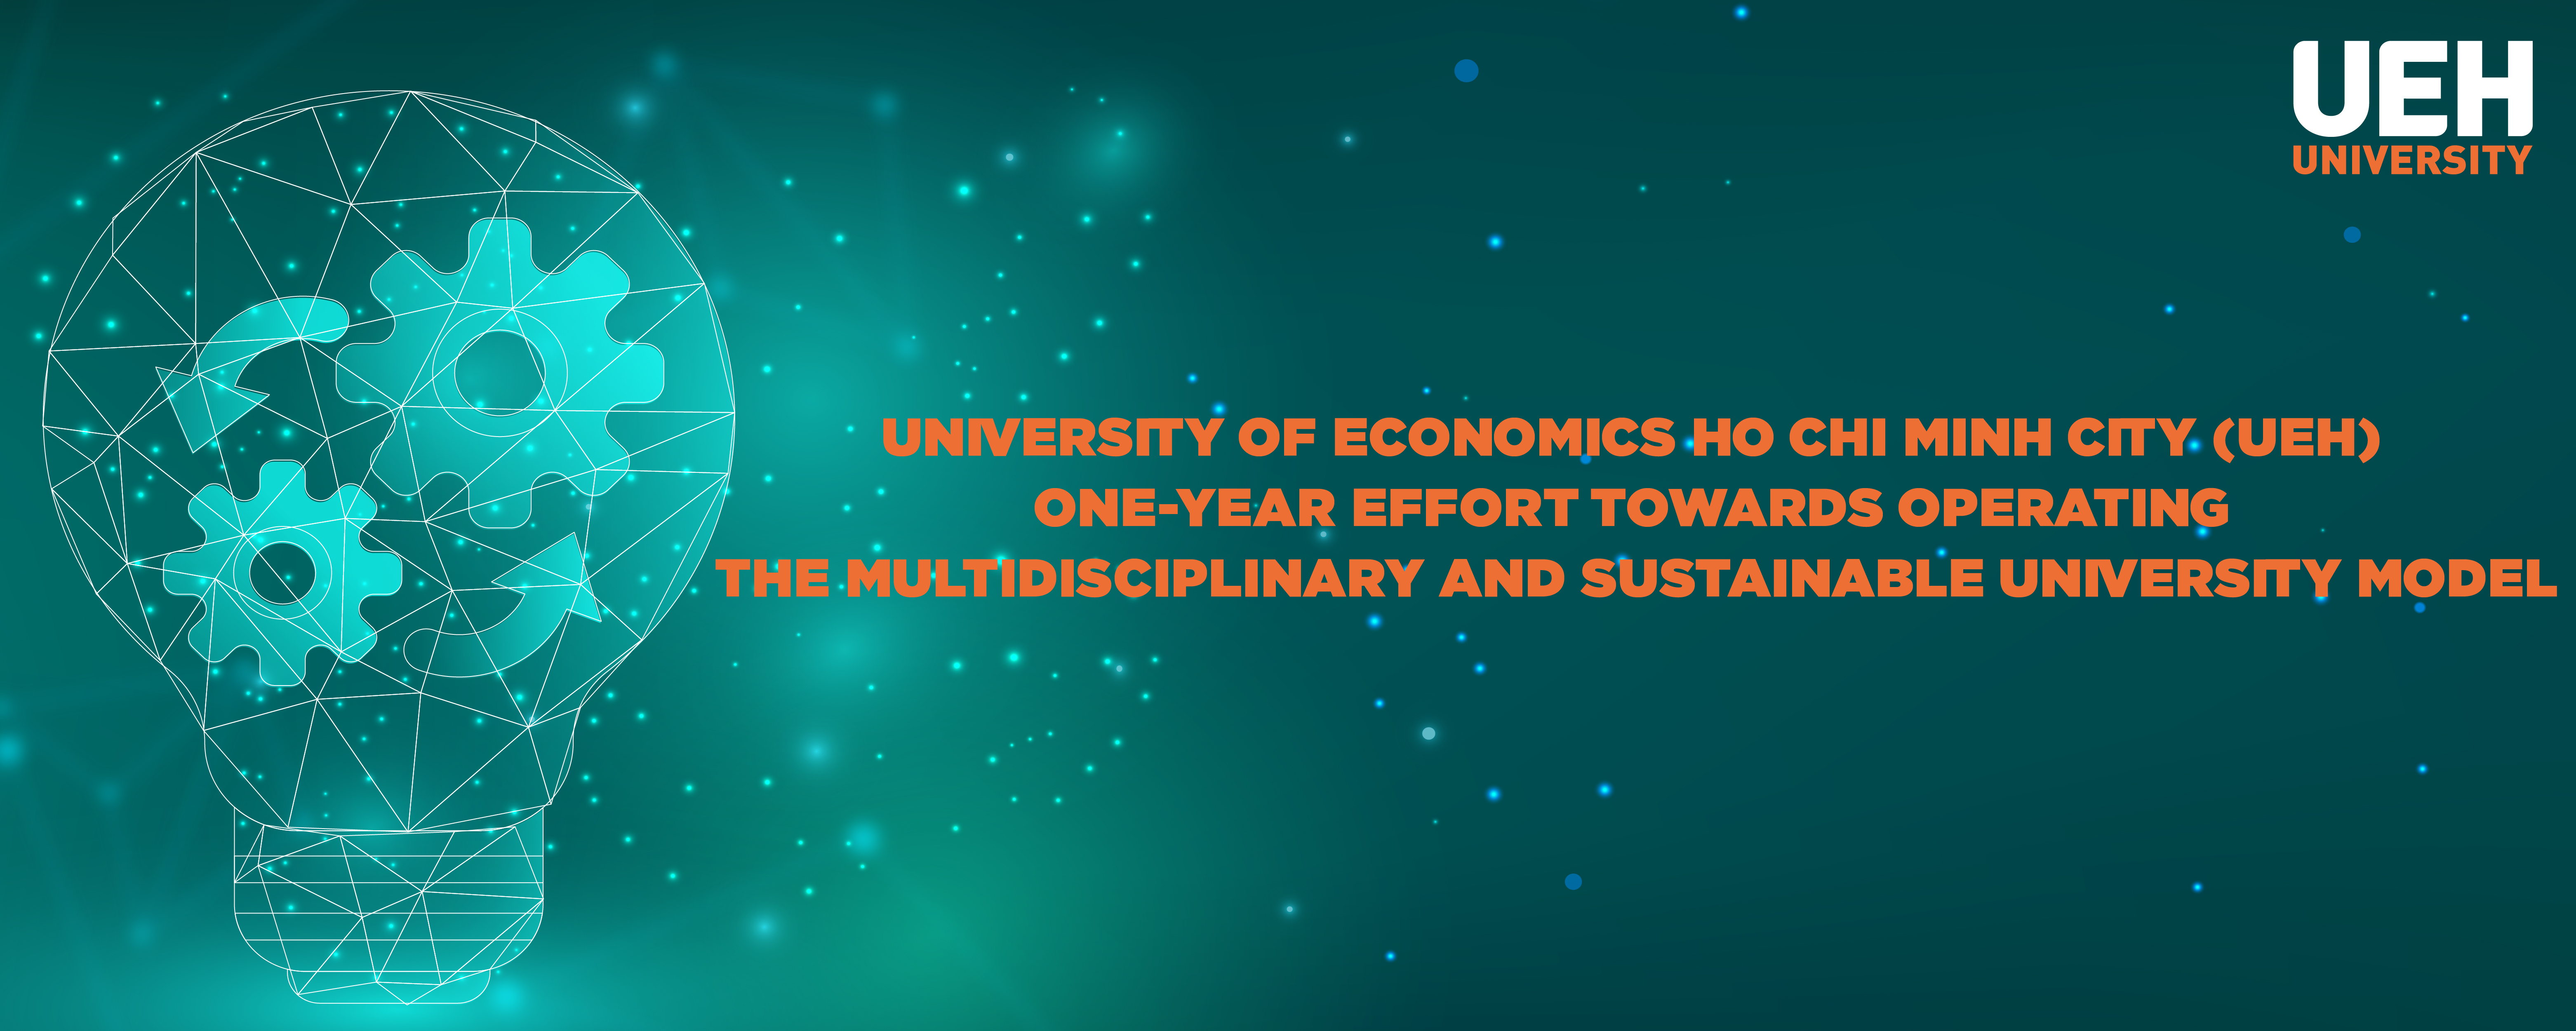 University of Economics Ho Chi Minh City (UEH) – One-year effort towards operating the Multidisciplinary and Sustainable University Model

